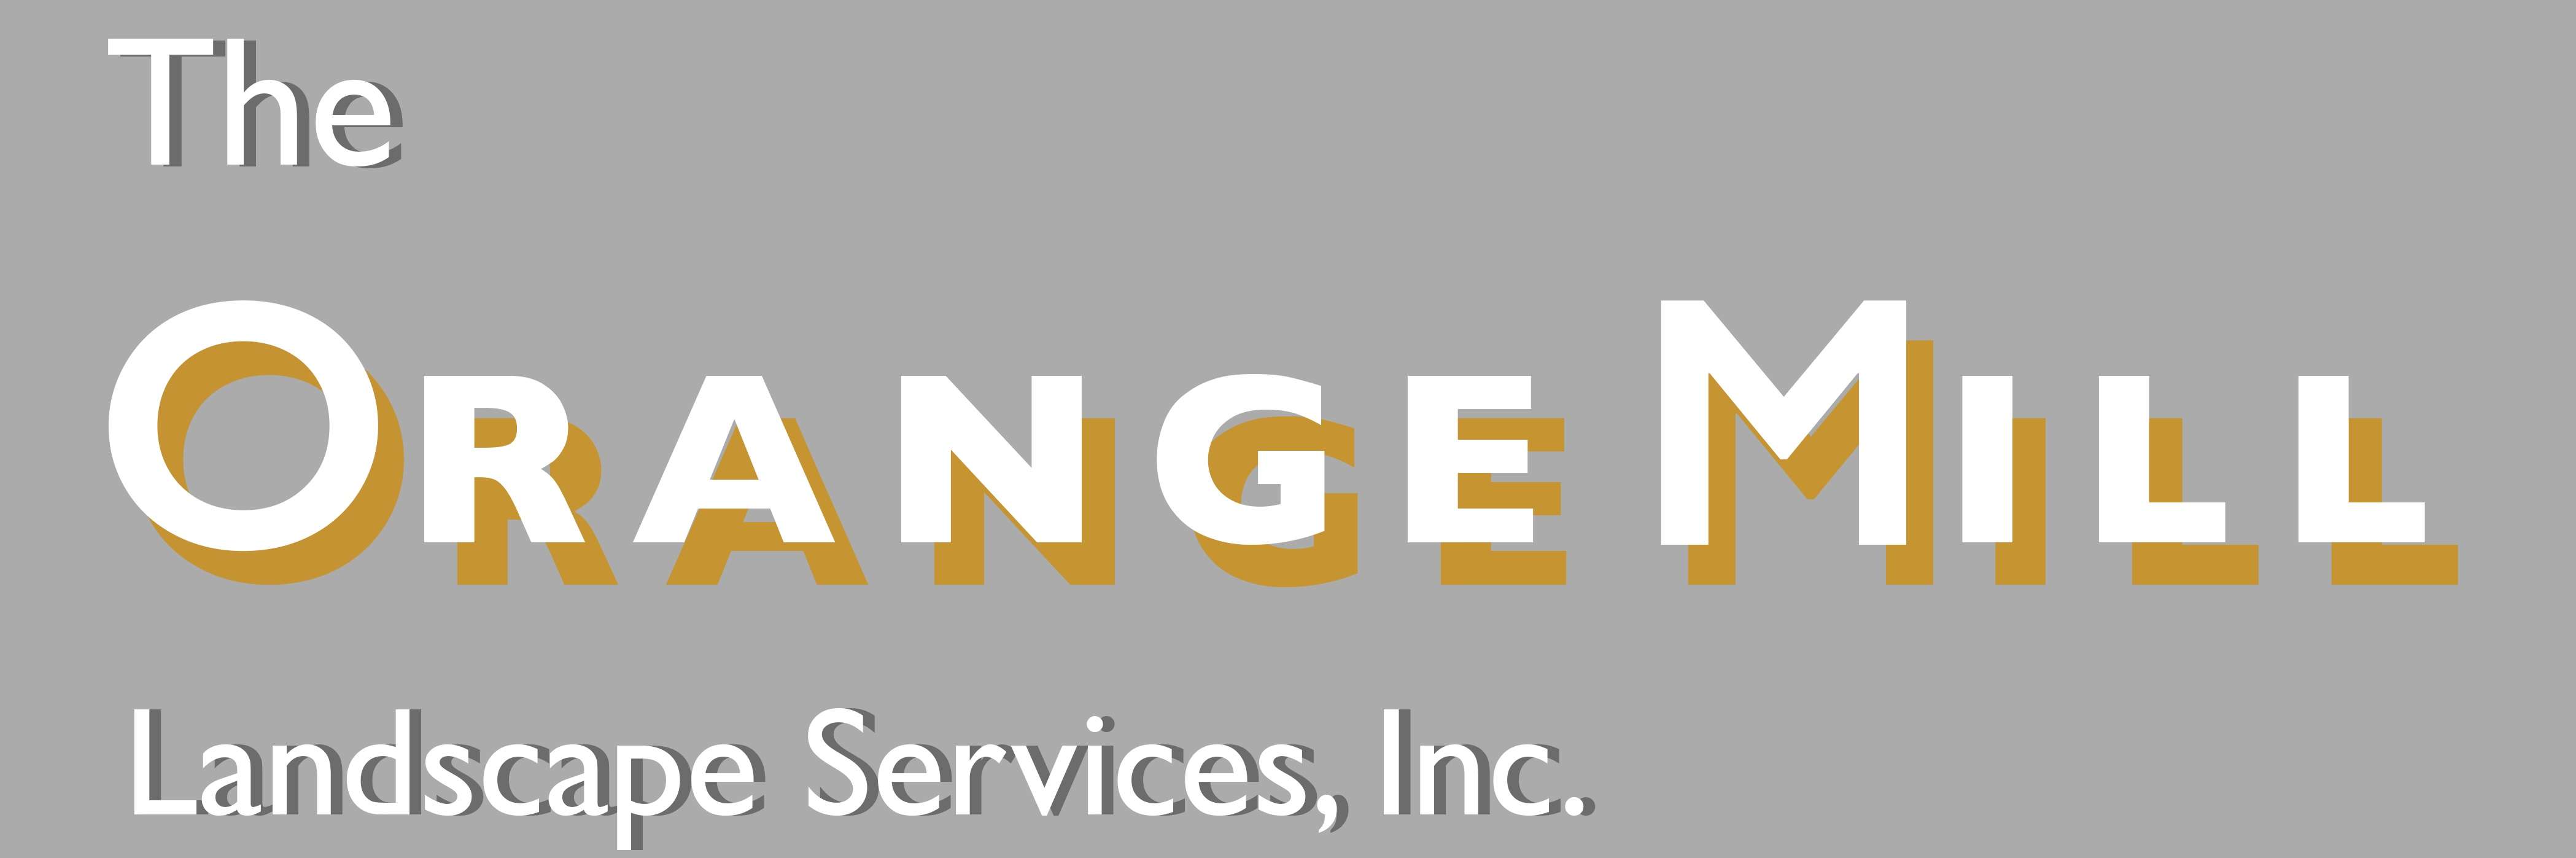 The Orange Mill Landscape Services Inc Logo